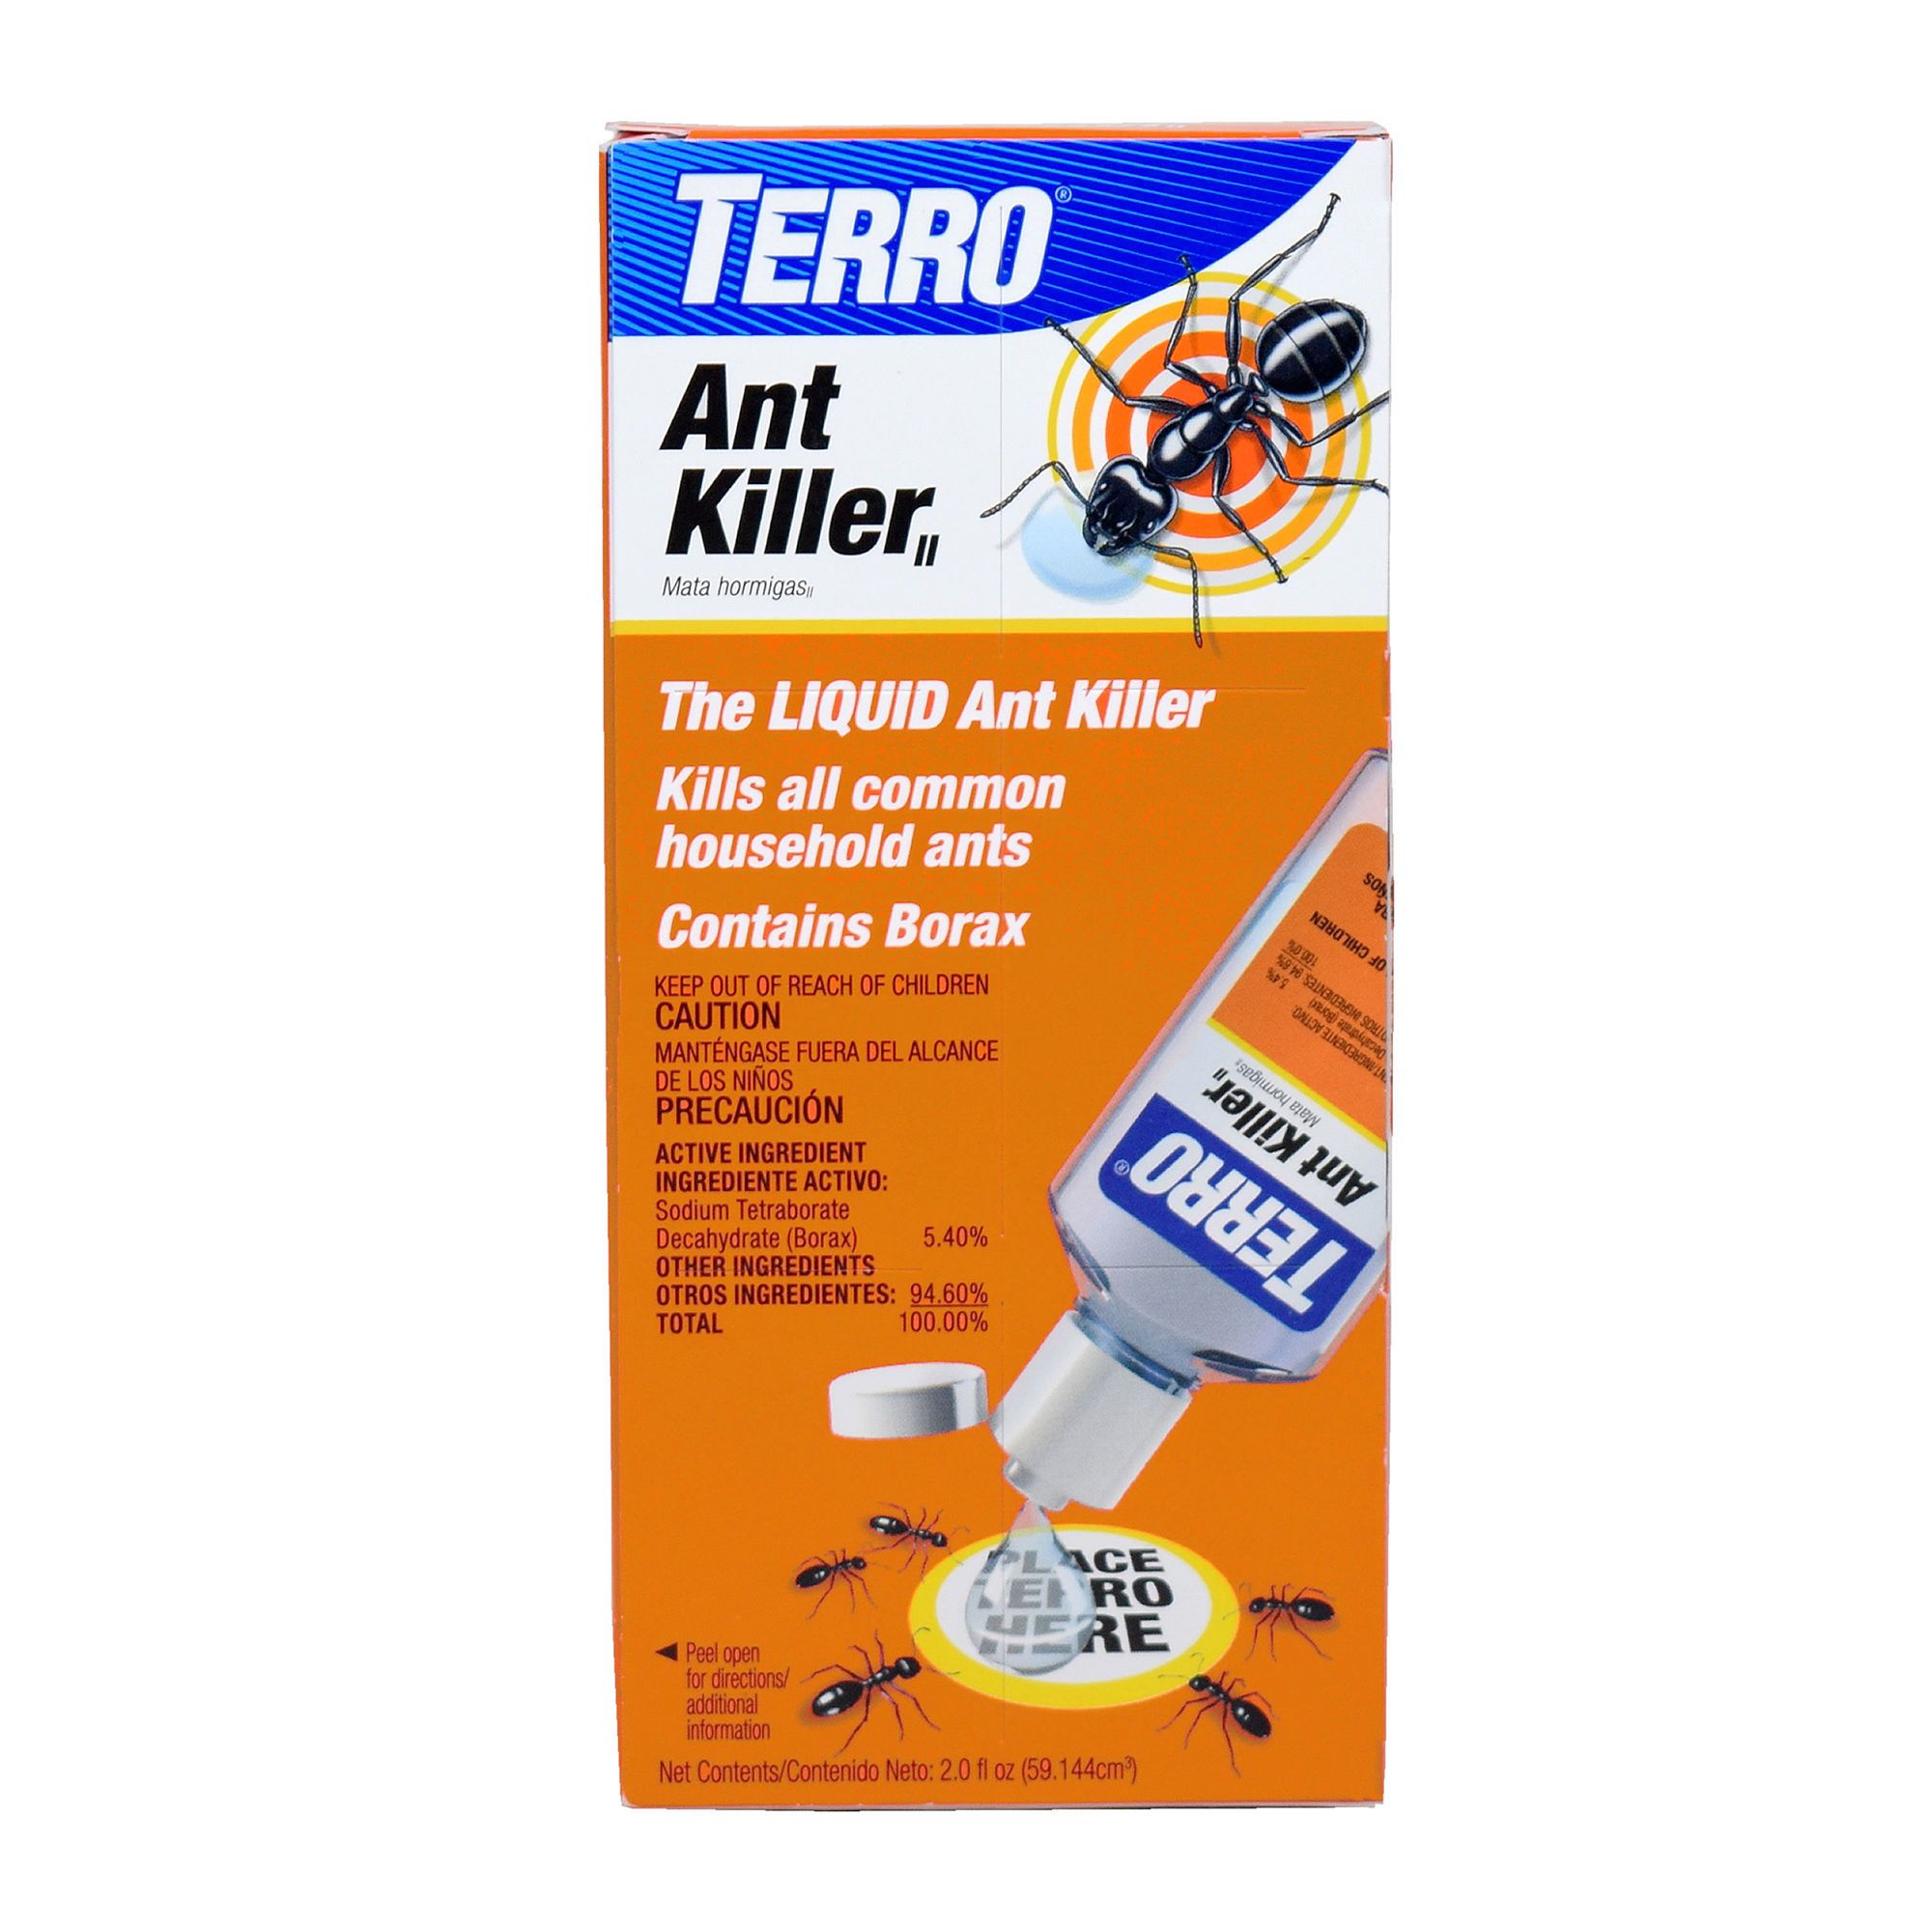 Ant Killer Liquid from TERRO